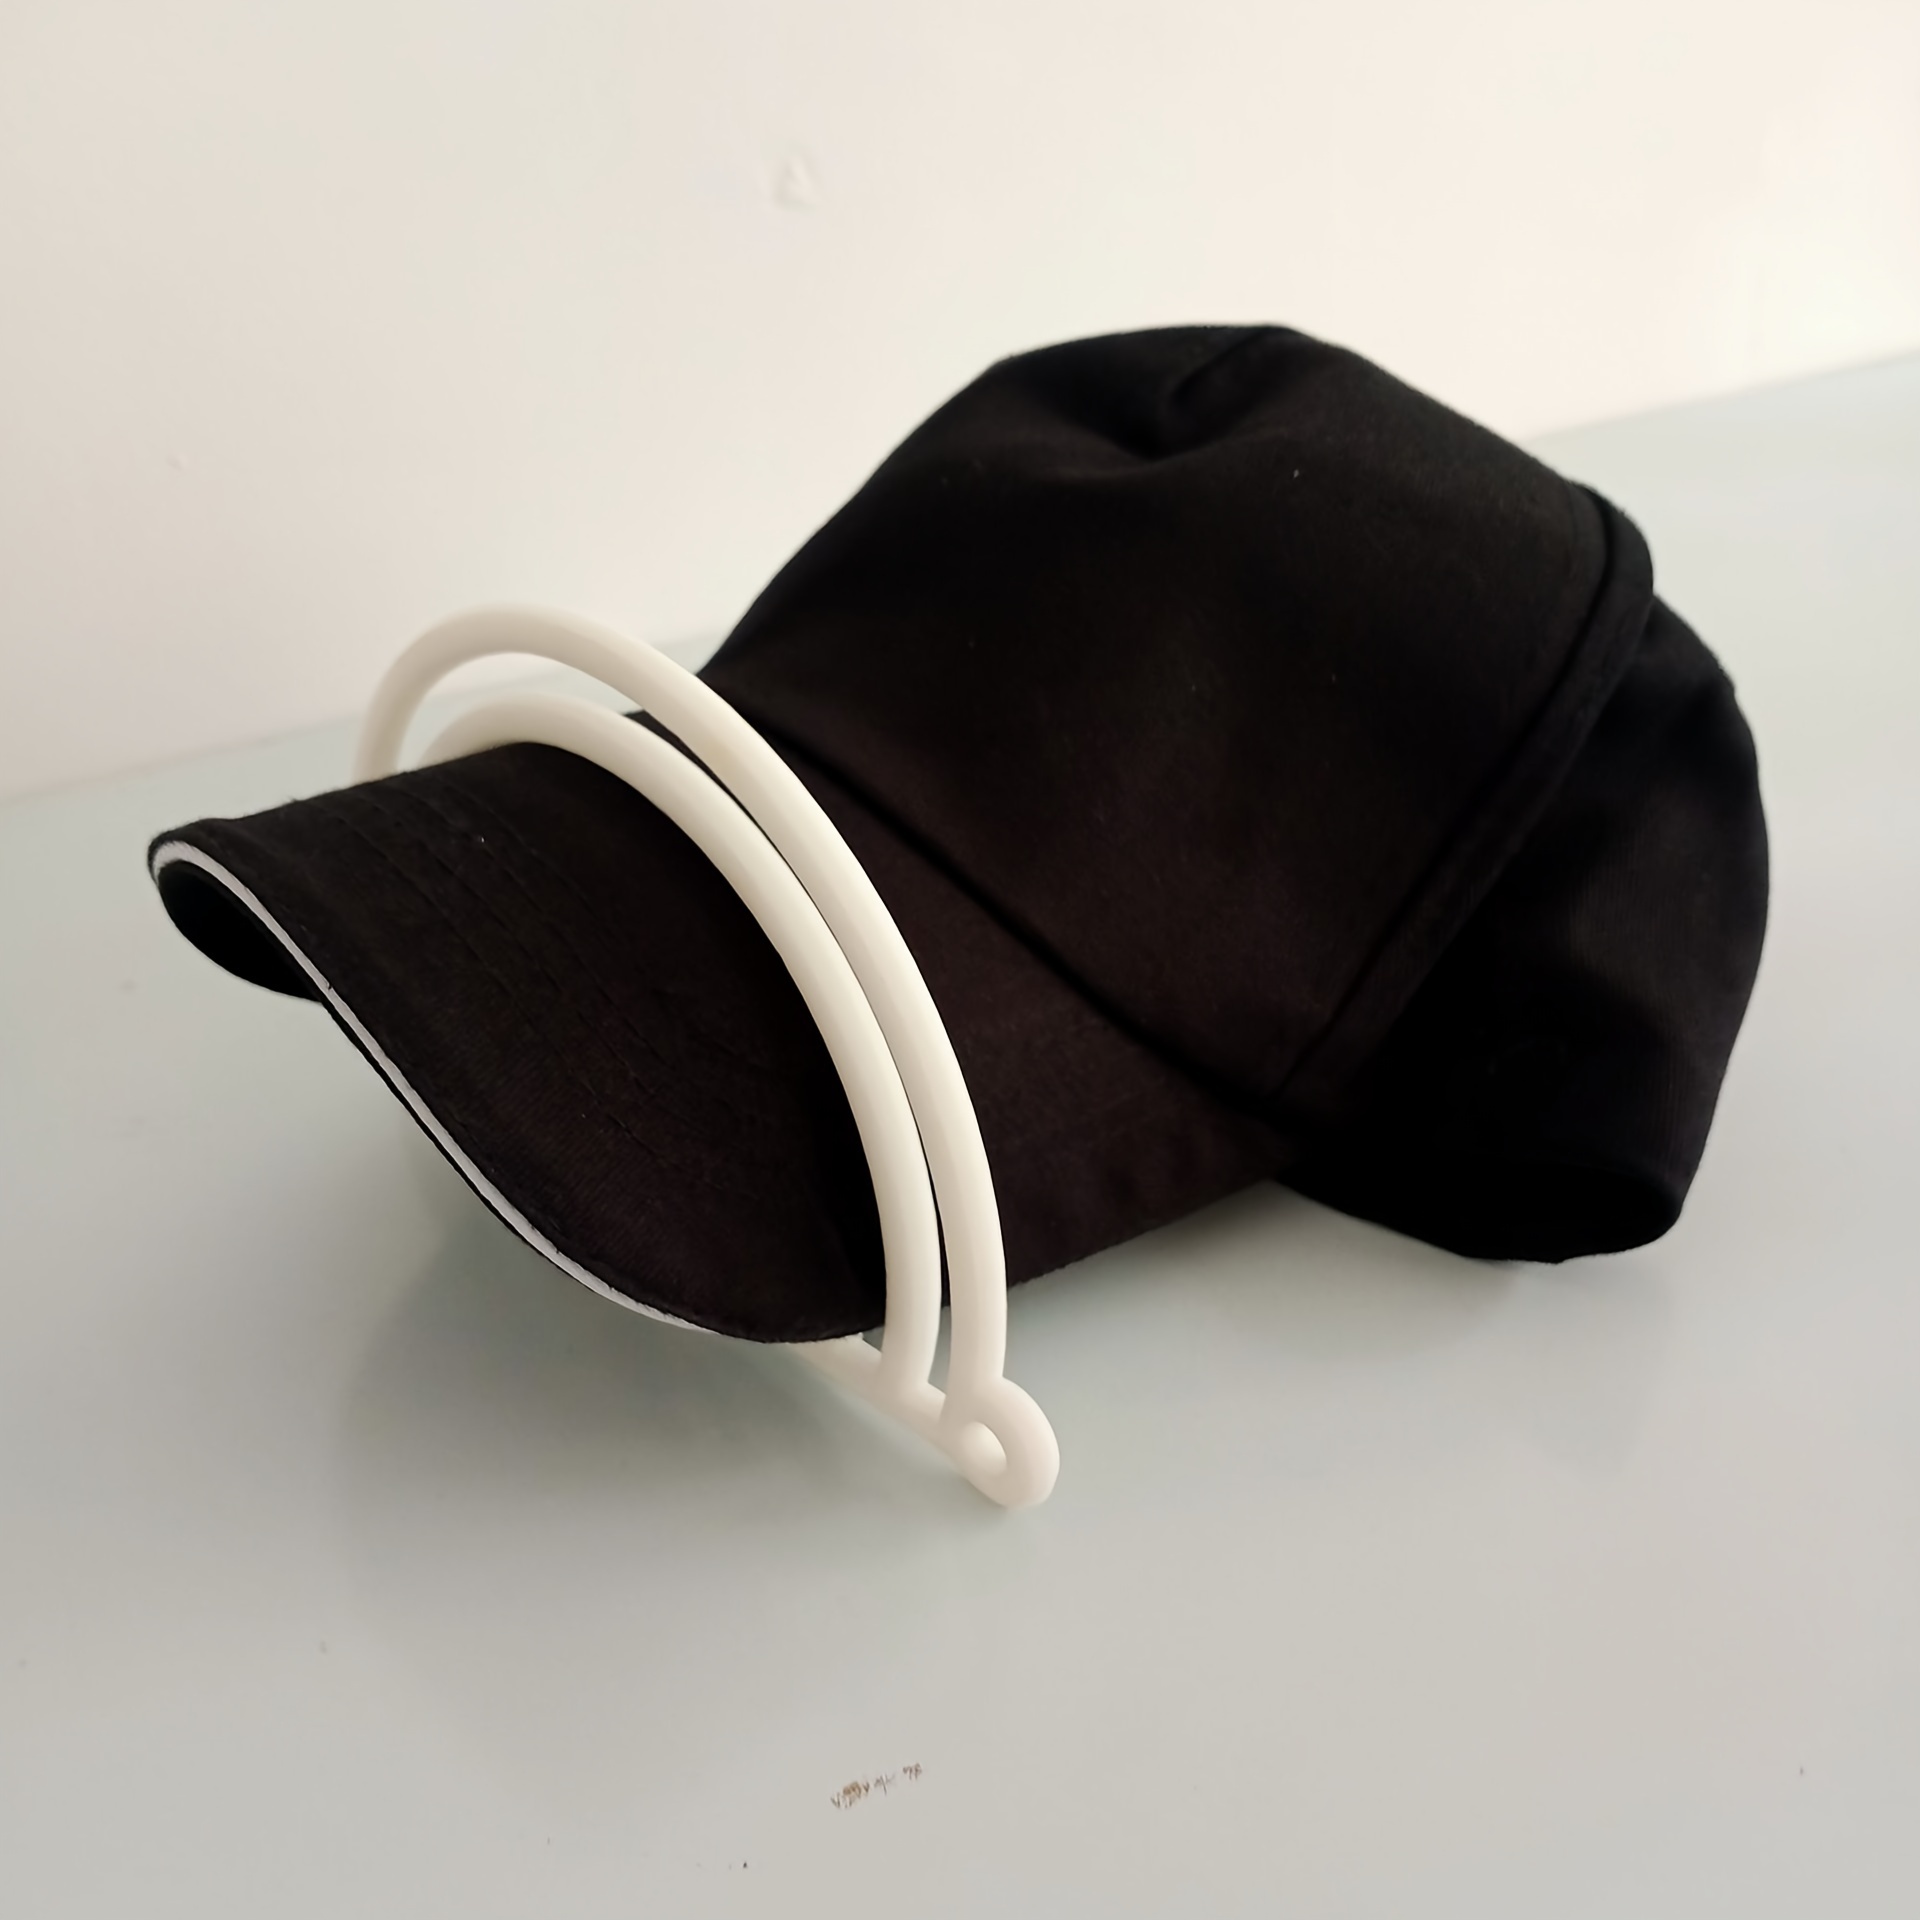 Hat Brim Bender, Hat Curving Band, Convenient Hat Shaper Design